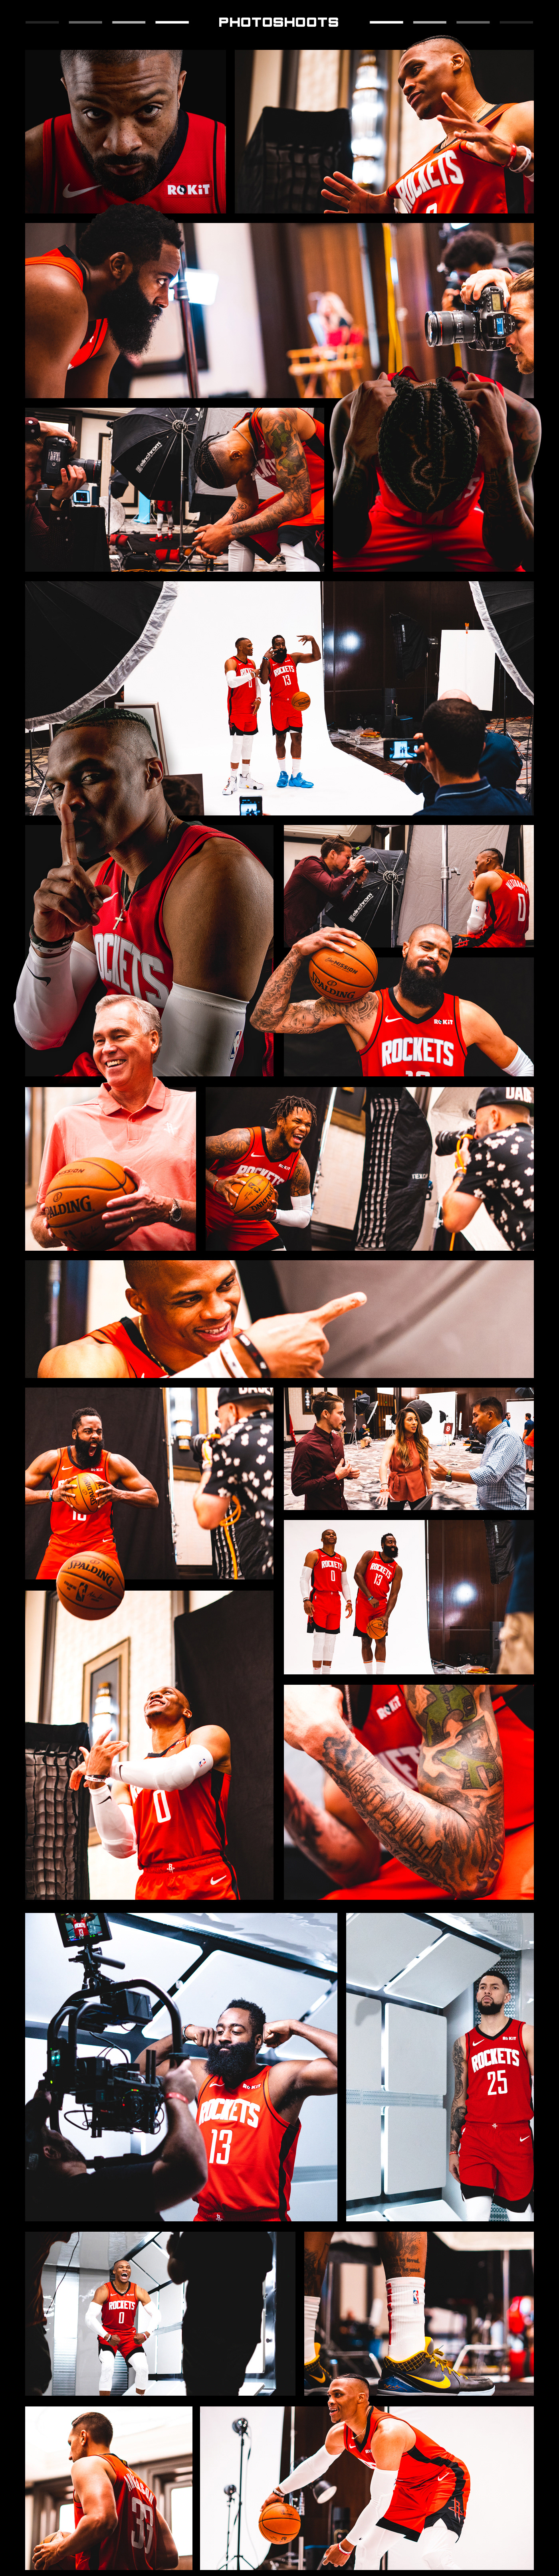 adidas basketball campaign houston Houston Rockets James Harden jumpman NBA Russell Westbrook Space 